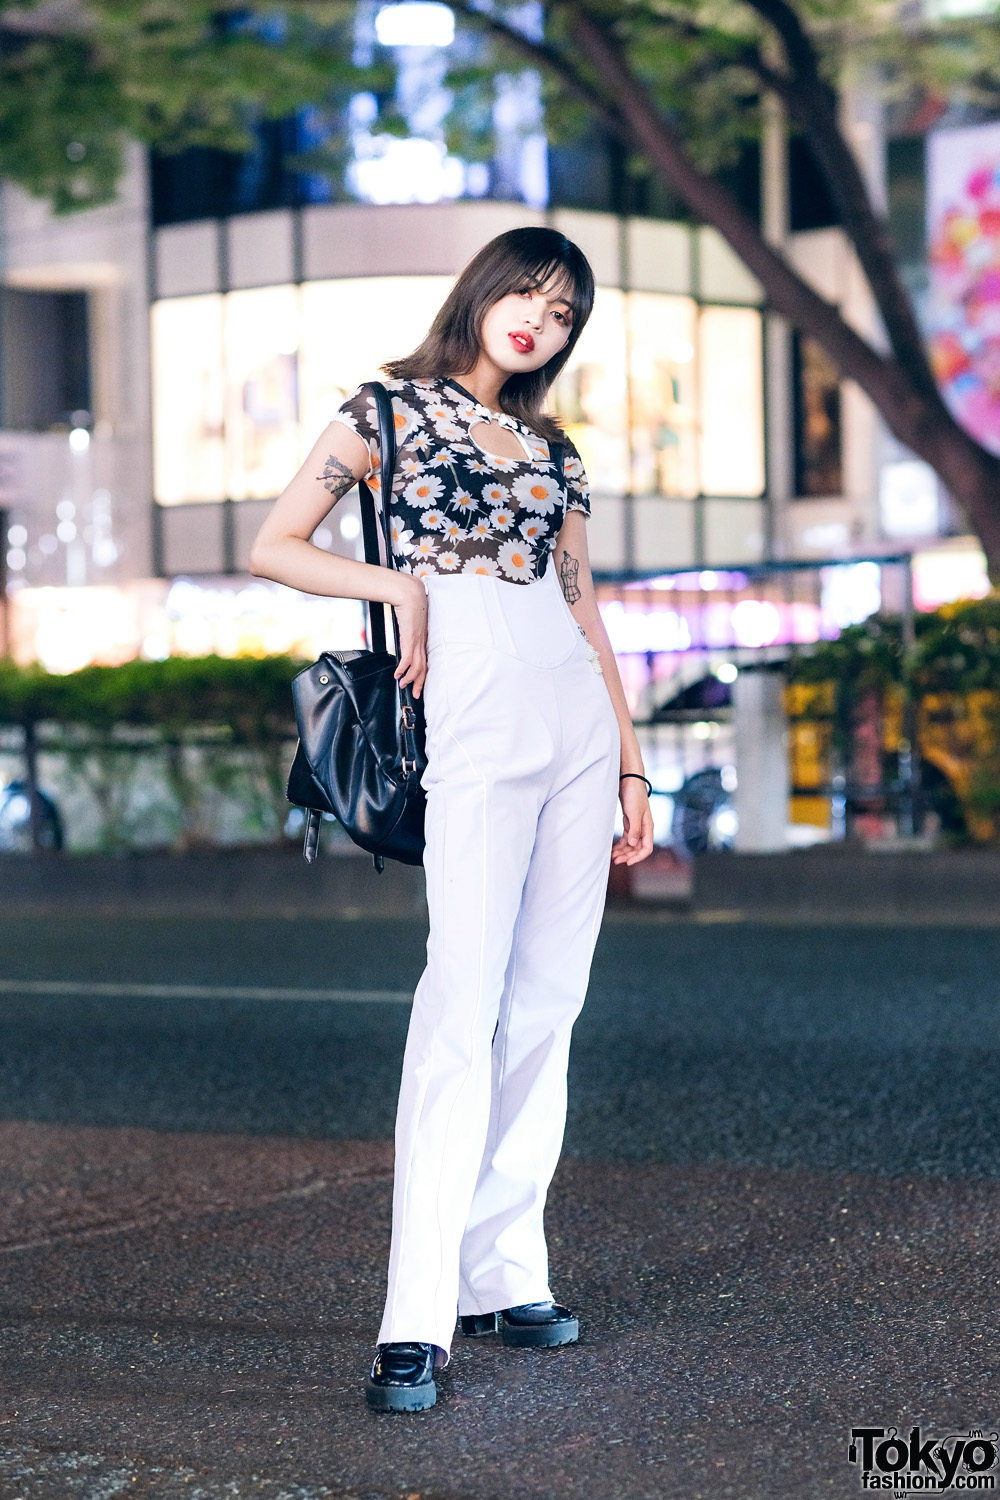 Japanese Designer in Chic Harajuku Street Style w/ Daisy Print Top, Nodress White Pants, Tattoos & Platform Boots